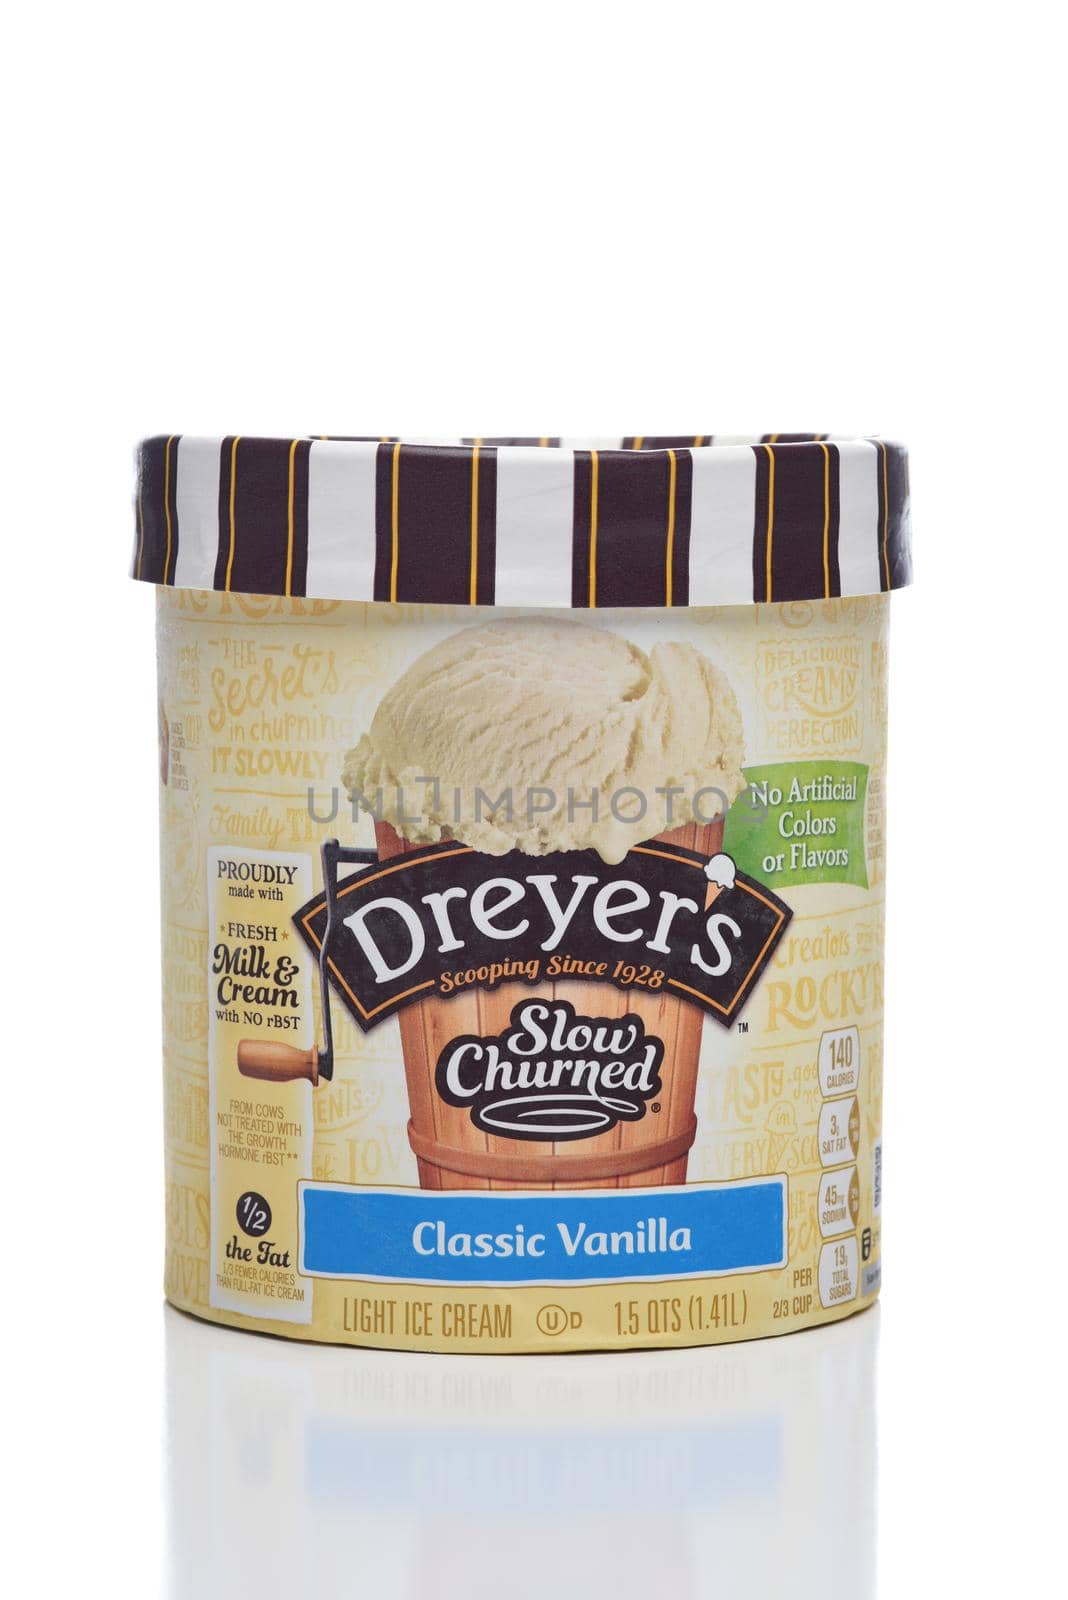 IRIVNE, CALIFORNIA - 4 JULY 2021: A Carton of Dreyers Slow Churned Classic Vanilla Ice Cream.